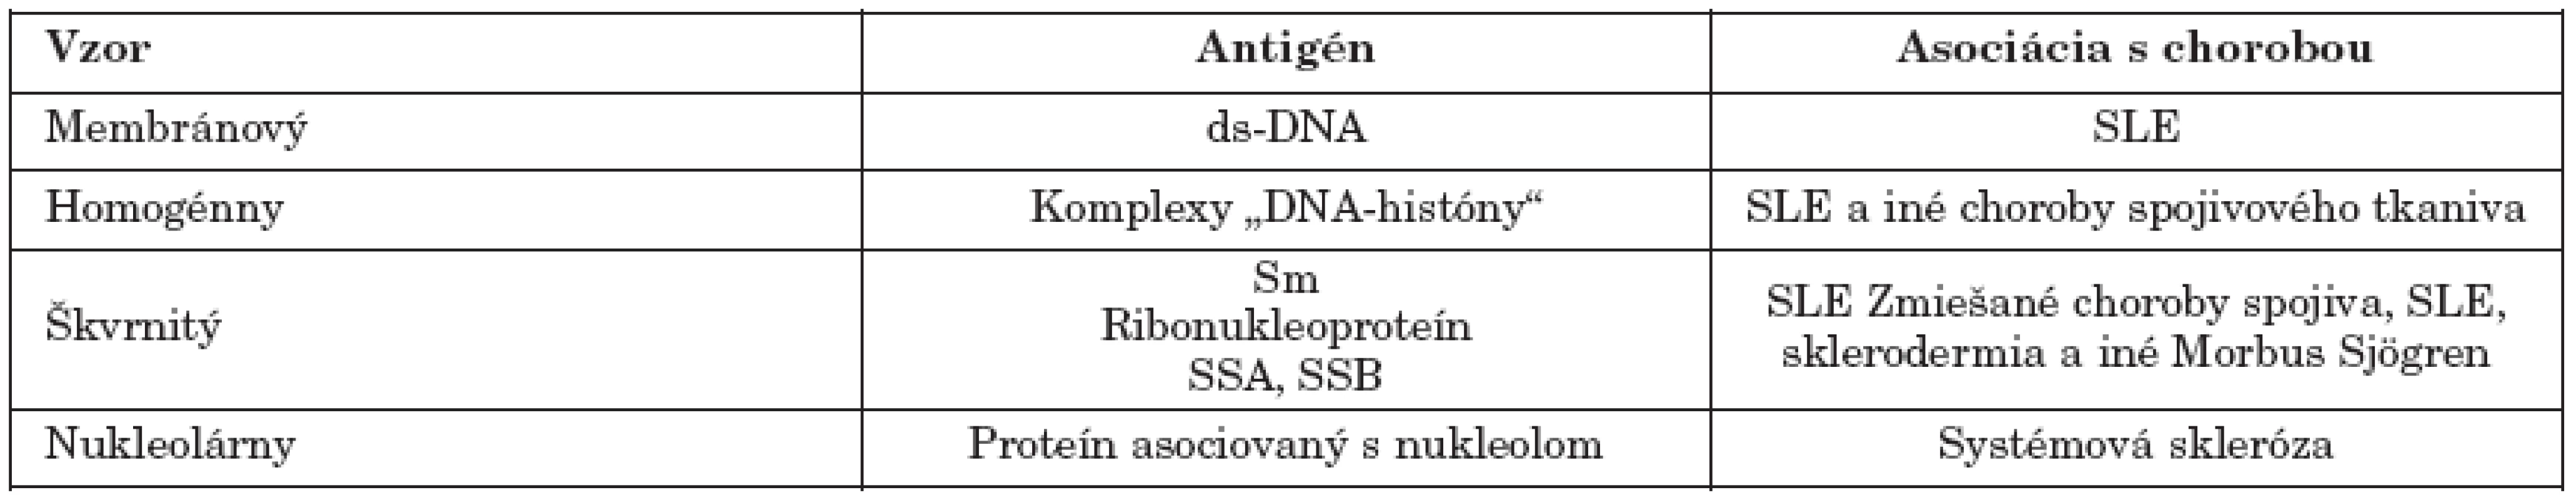 Imunofluorescenčné vzory antinukleárnych protilátok pri SLE
Table 2. Immunofluorescent antinuclear antibody patterns in SLE